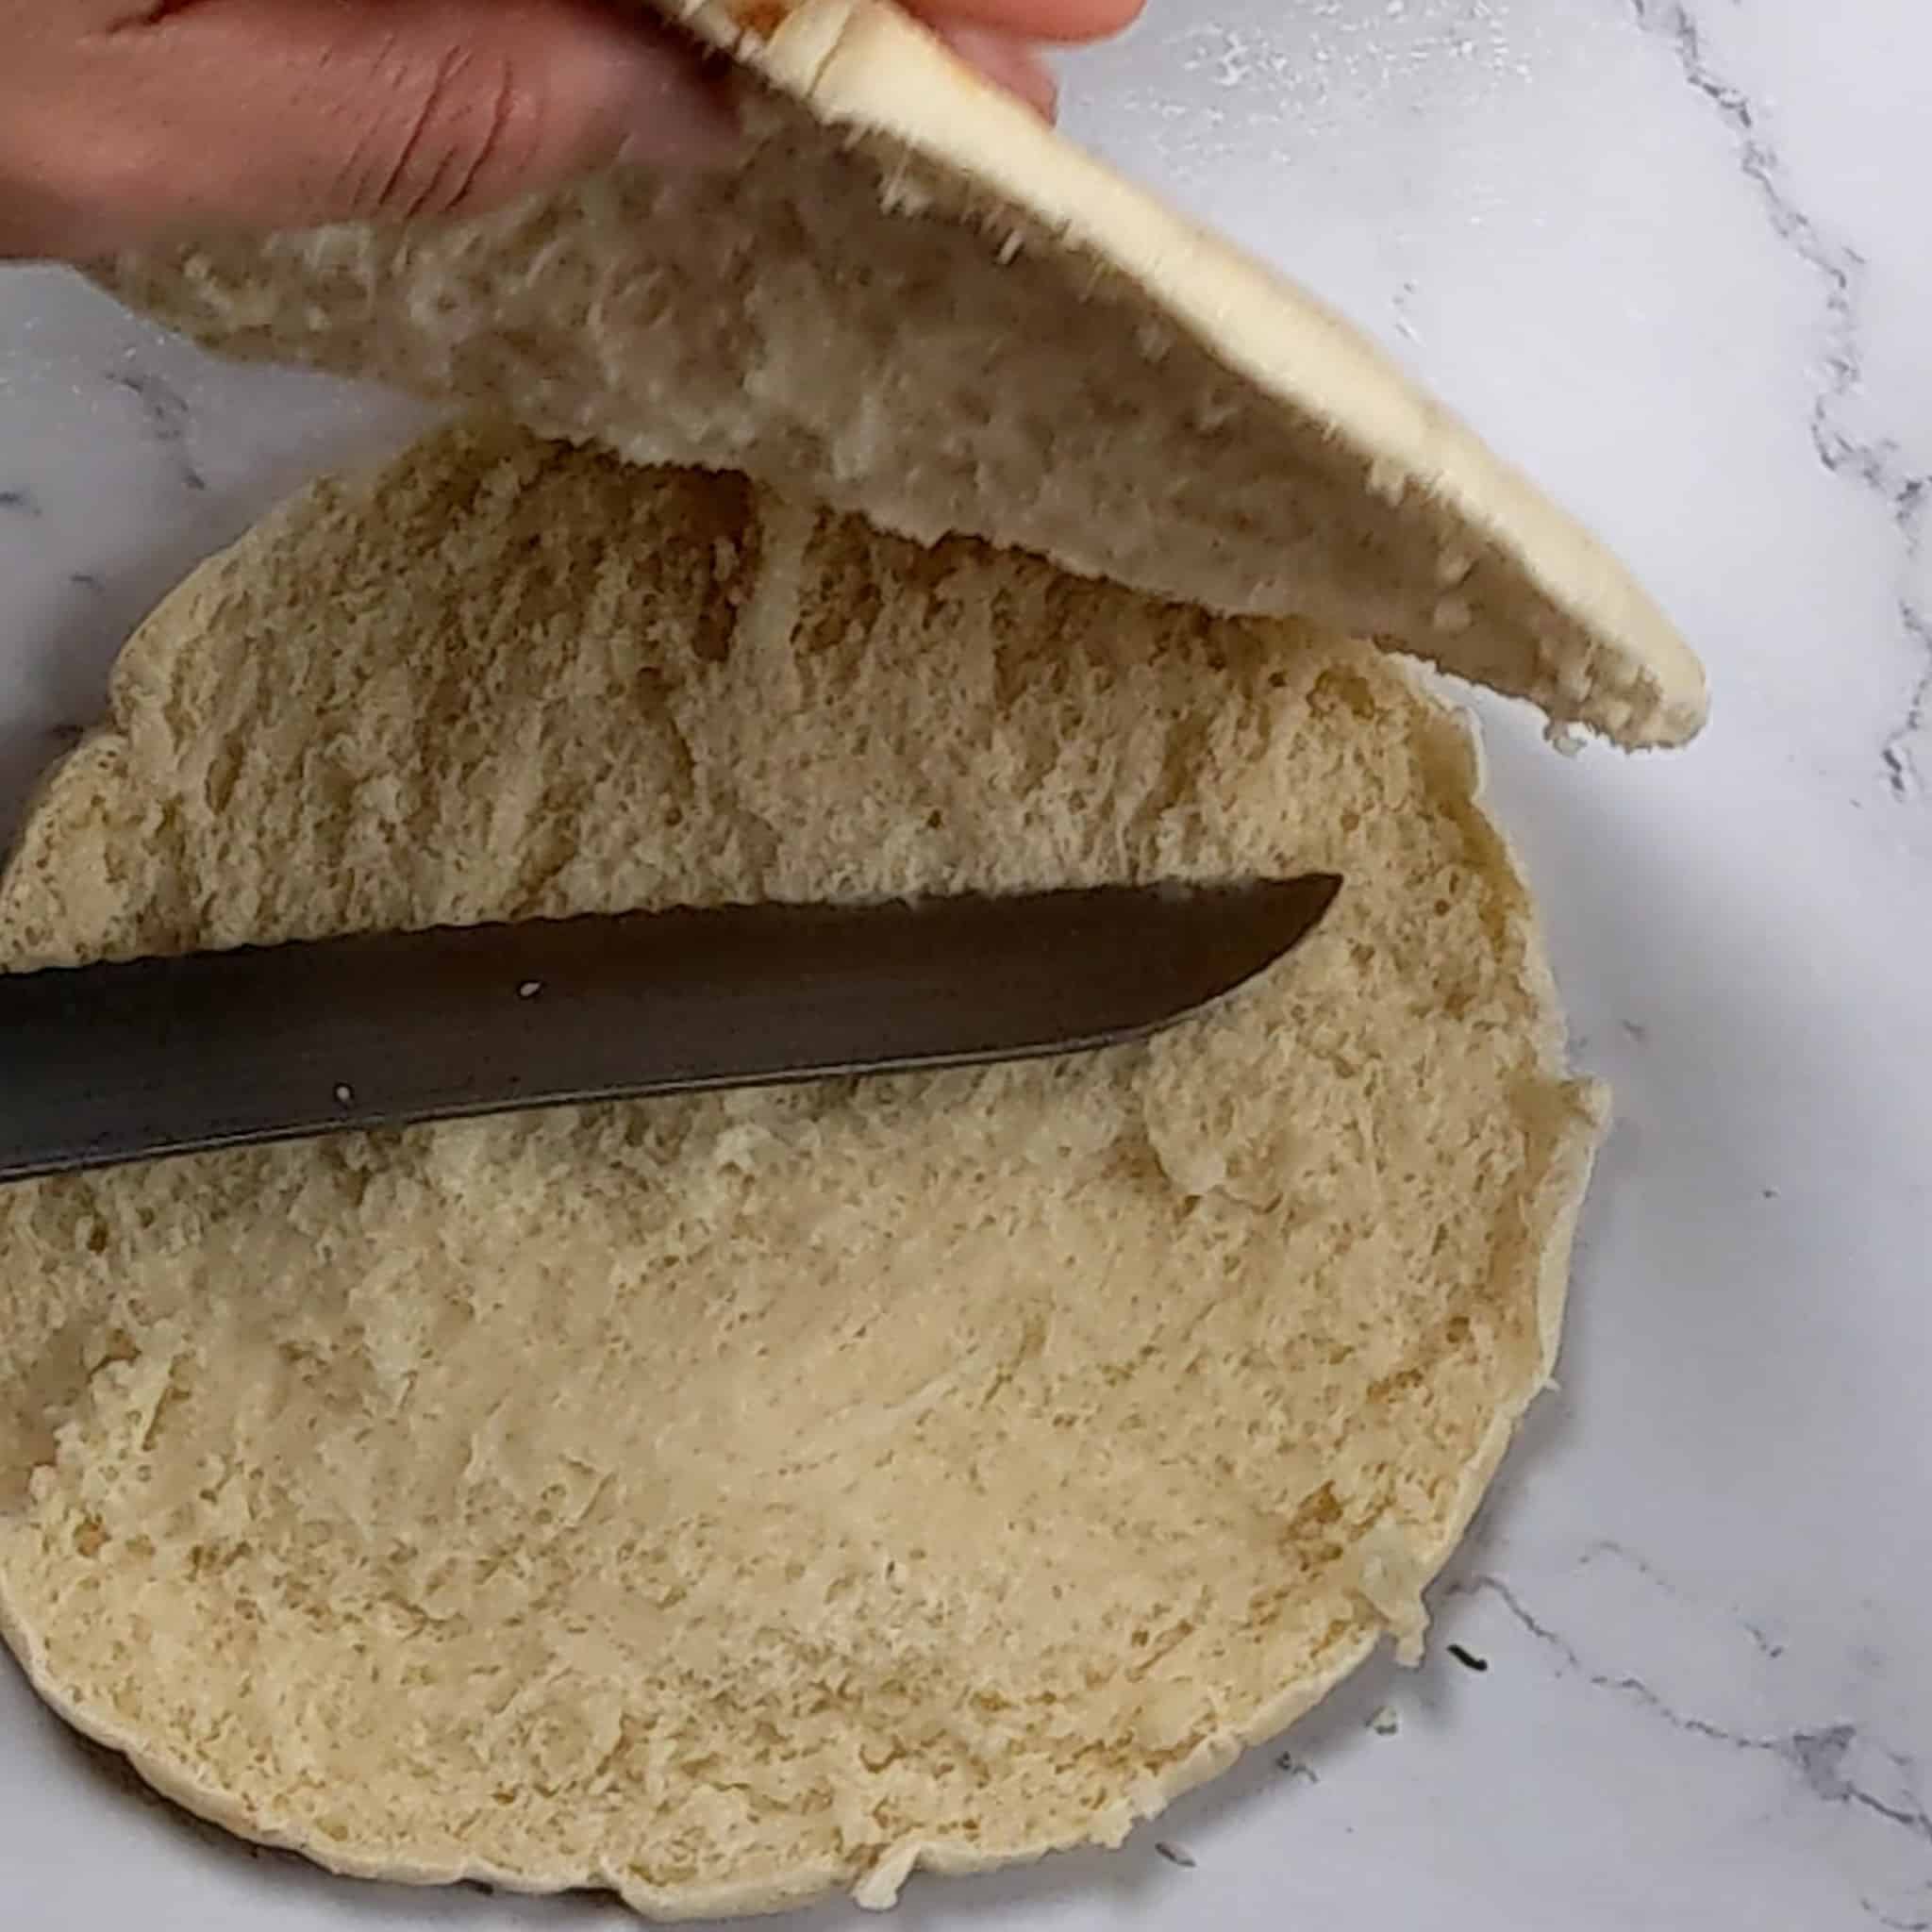 pita bread flipped open while the bread knife cuts it in half.